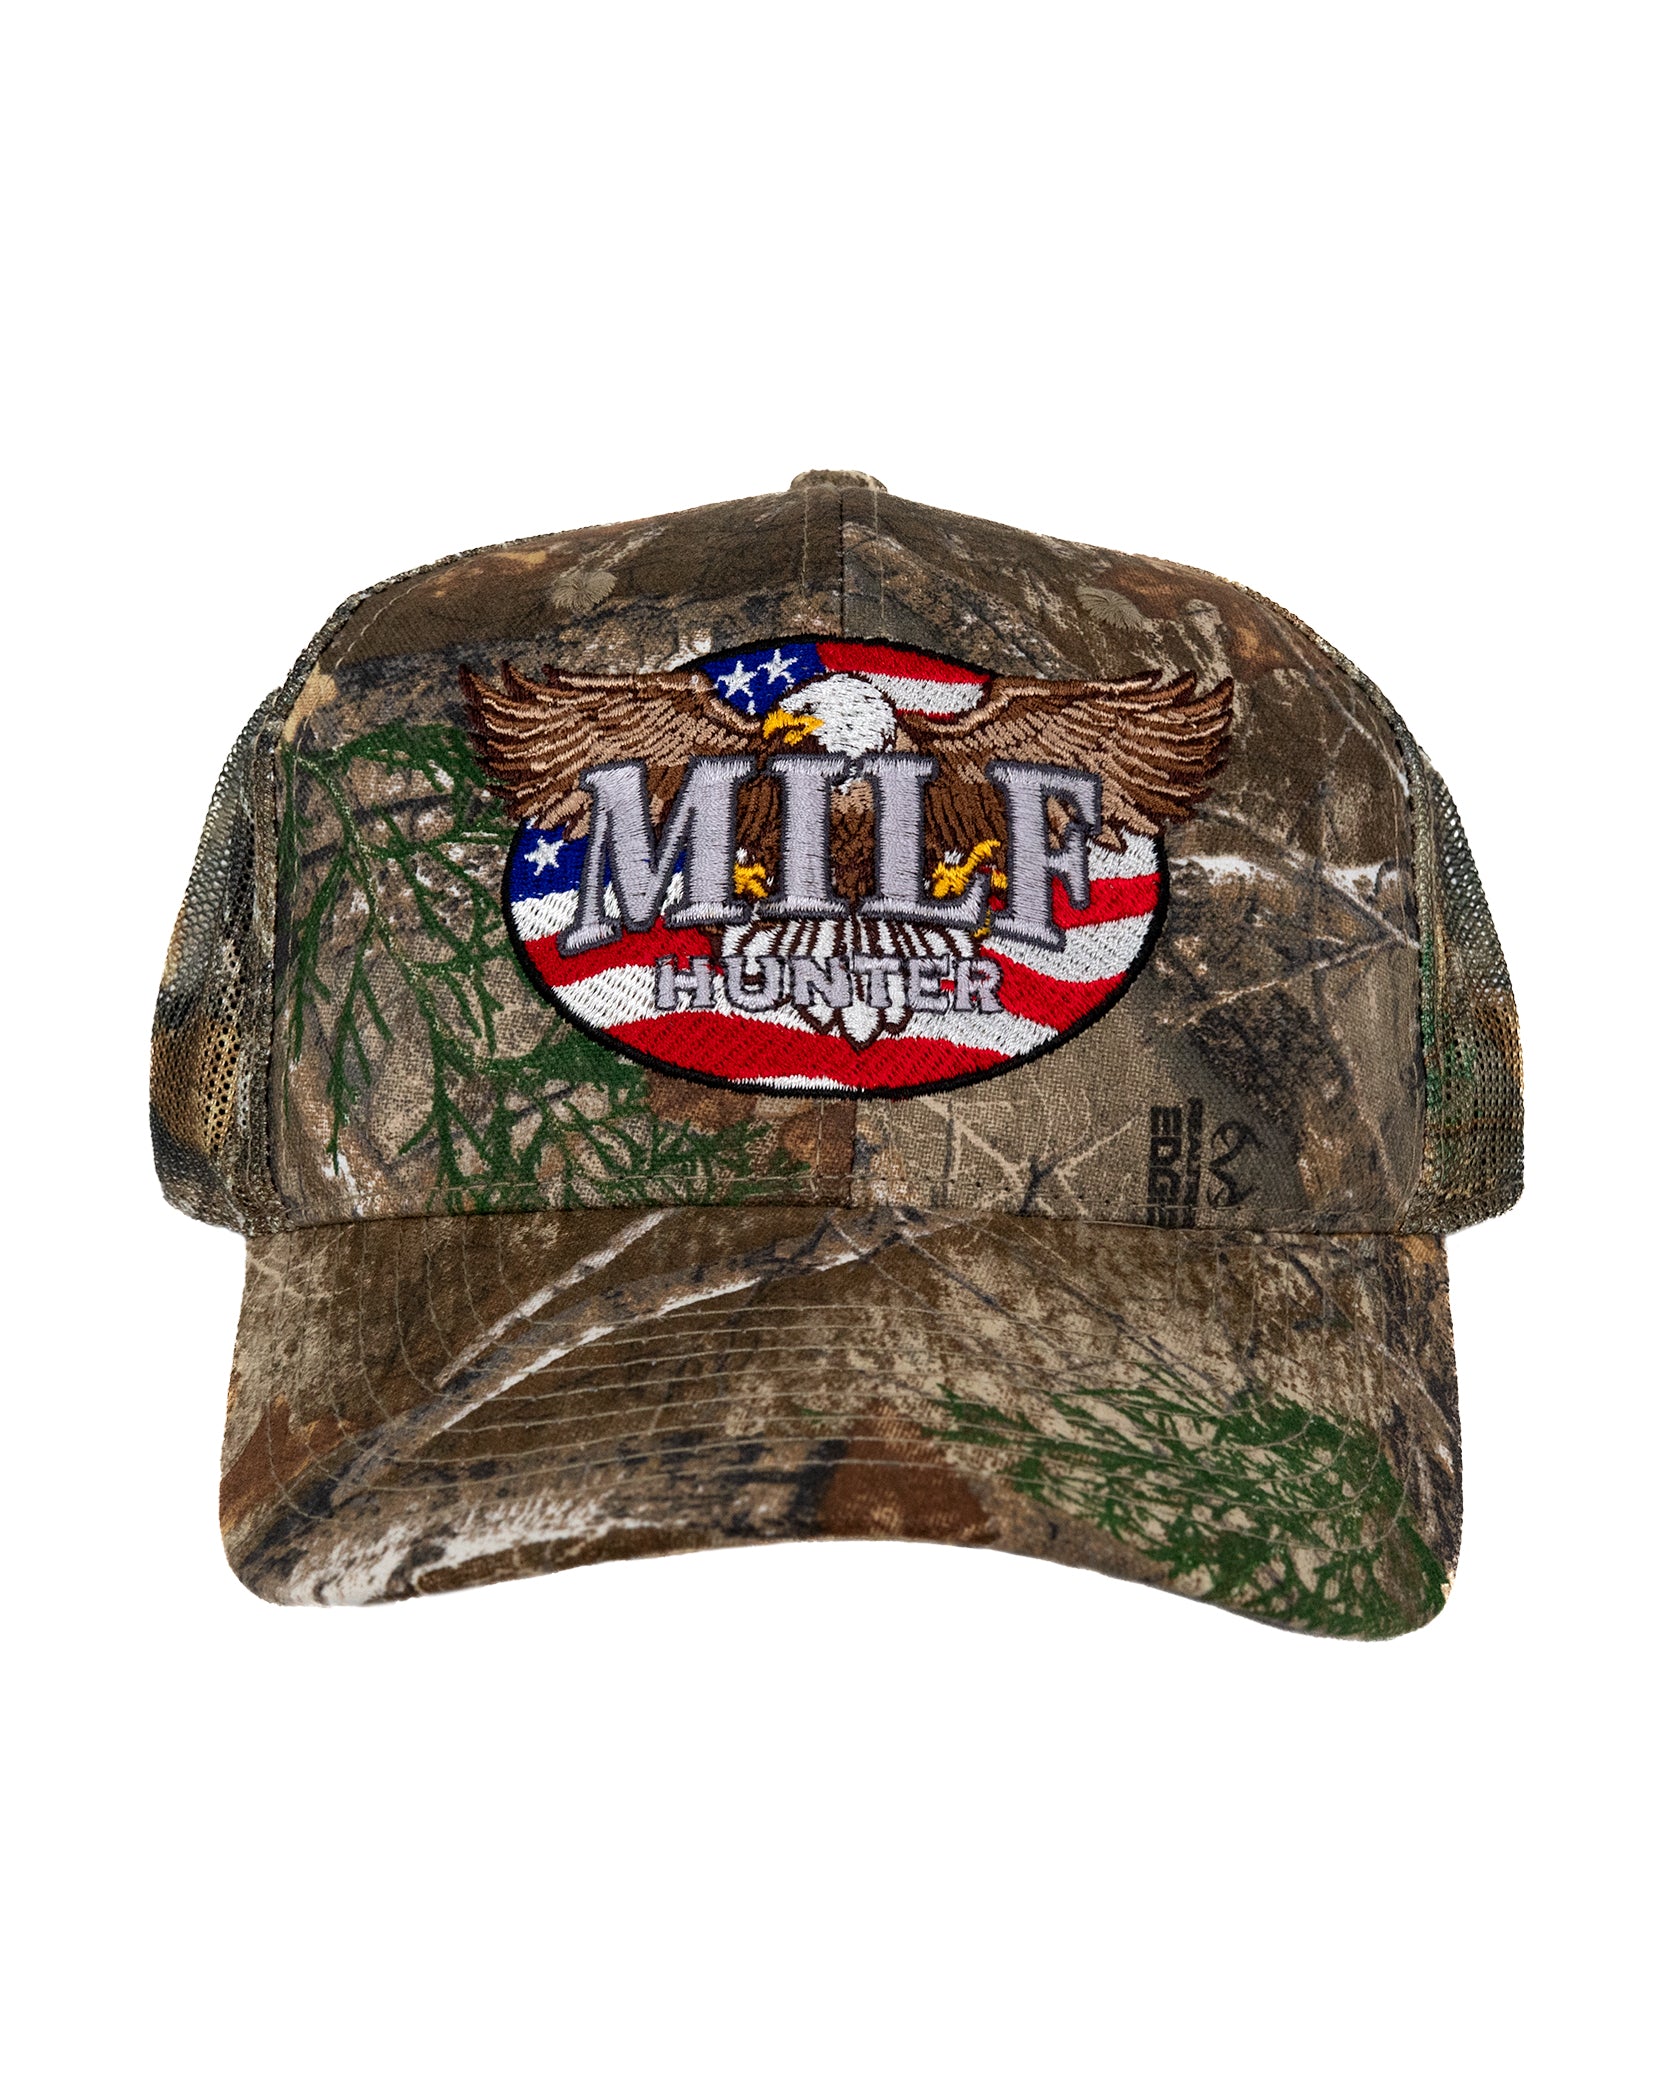 MILF Hunter Realtree Trucker Hat - Camo